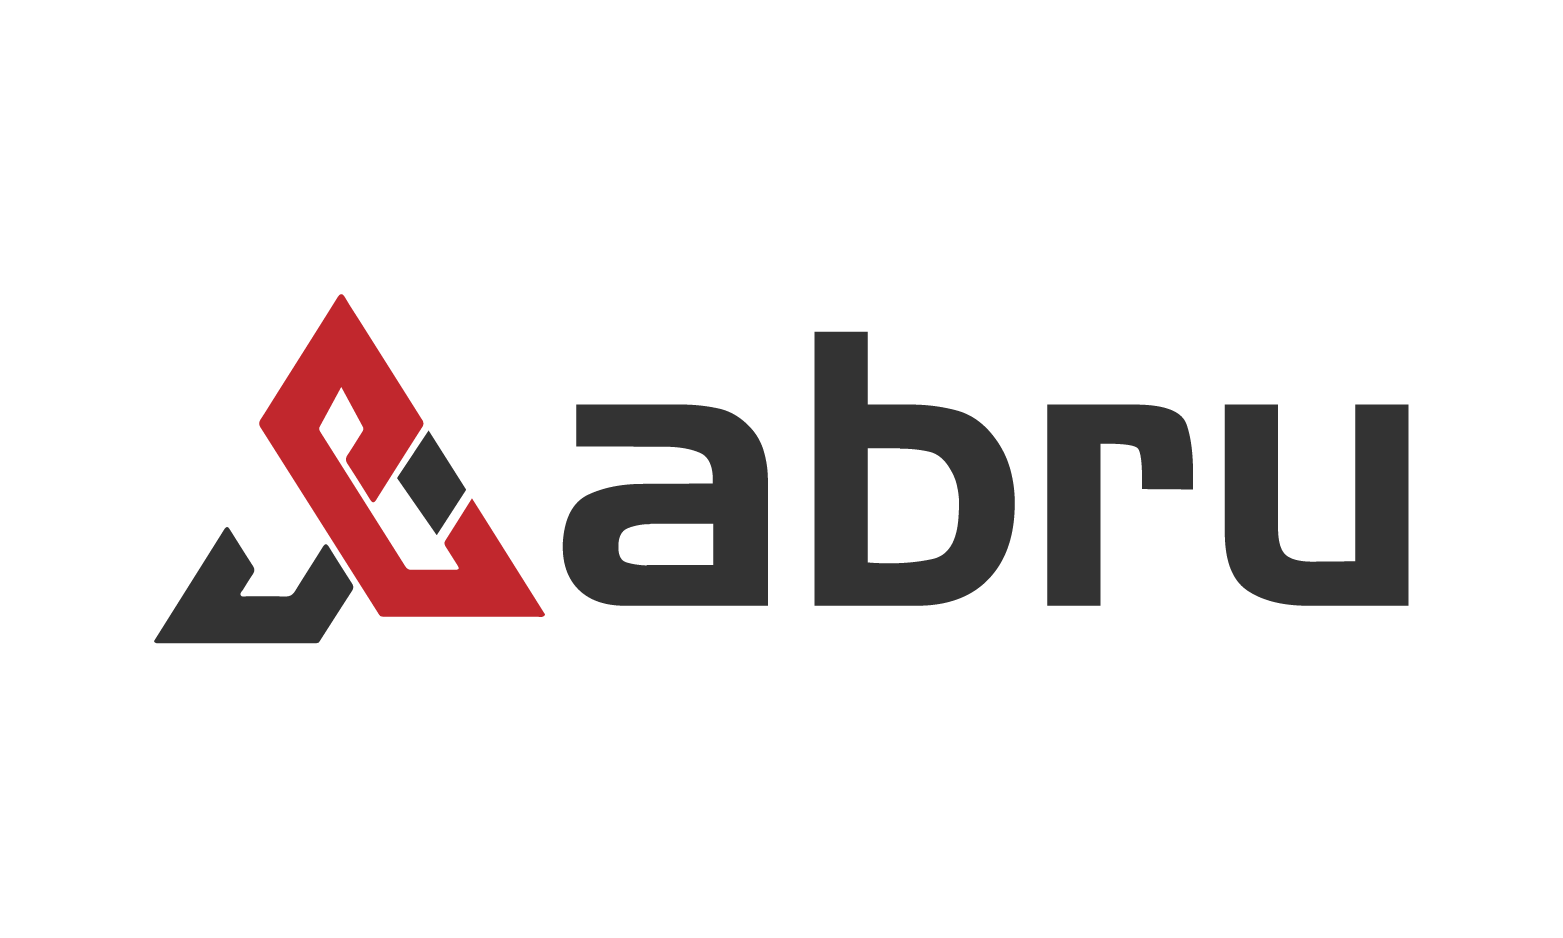 Abru.com - Creative brandable domain for sale